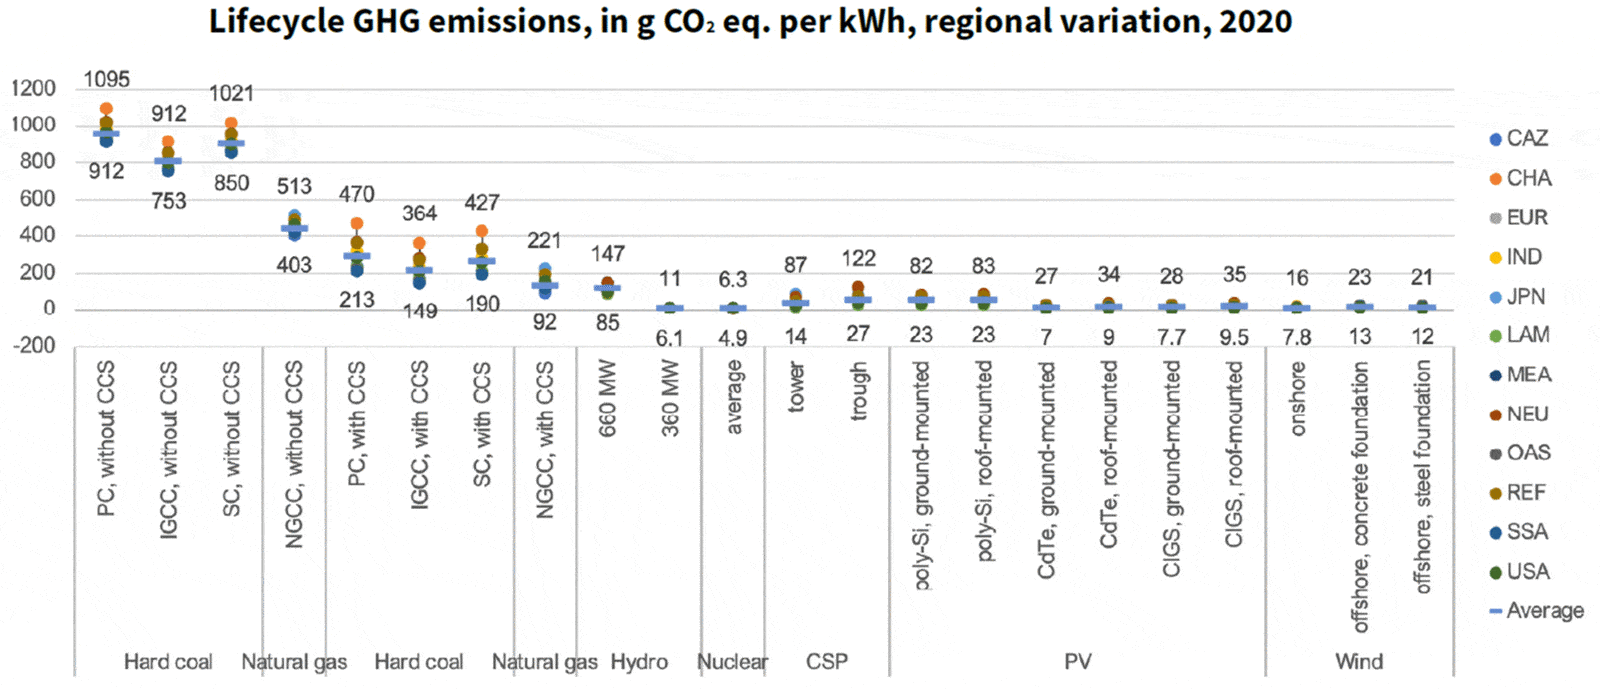 Regionale variaties van broeikasgasemissies gedurende de levenscyclus voor het jaar 2020.